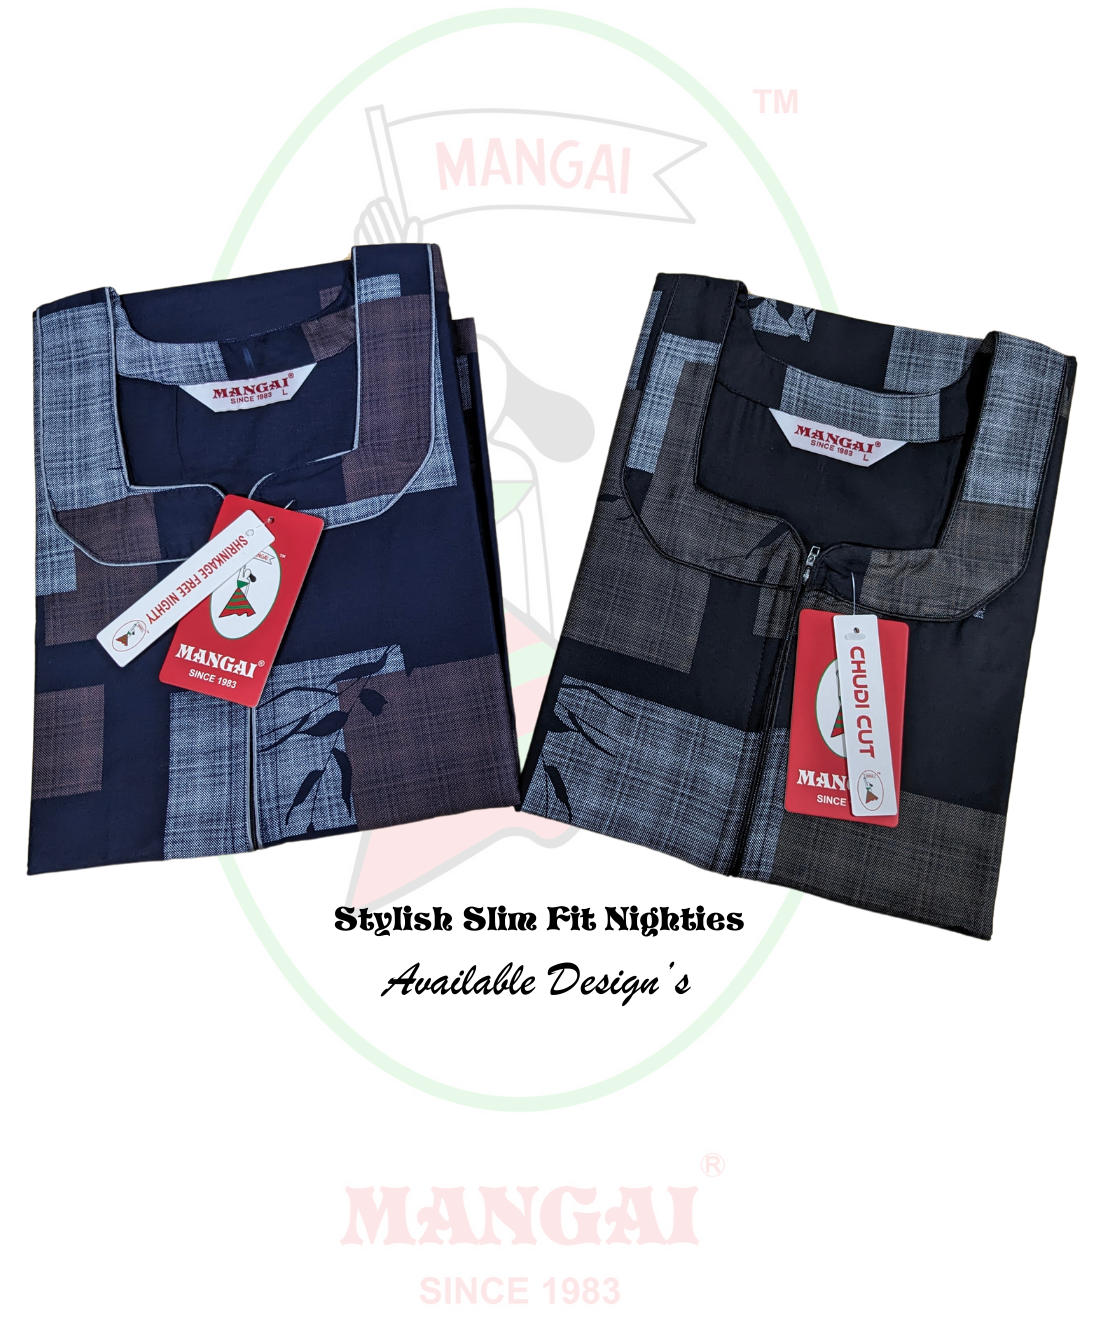 MANGAI New Arrivals Regular Fit Cotton Nighties - All Over Printed Stylish Nightwear for Stylish Women | Beautiful Nighties for Stylish Women's | Shrinkage Free Nighties | New CHUDI Cut Model